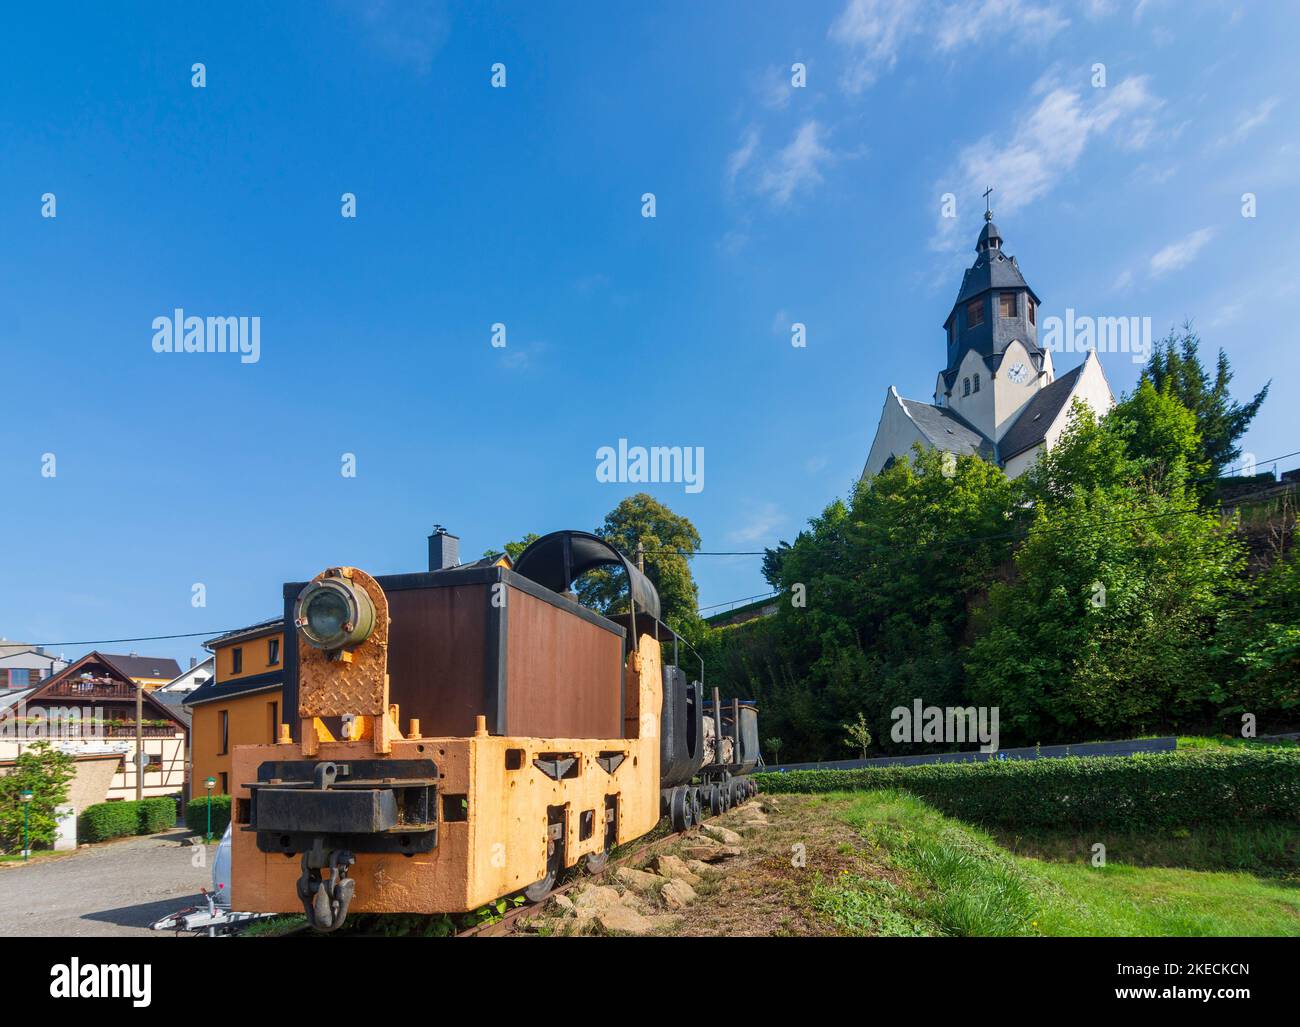 Thermalbad Wiesenbad, river Zschopau, church in Wiesa, mining locomotiv in Erzgebirge, Ore Mountains, Sachsen, Saxony, Germany Stock Photo